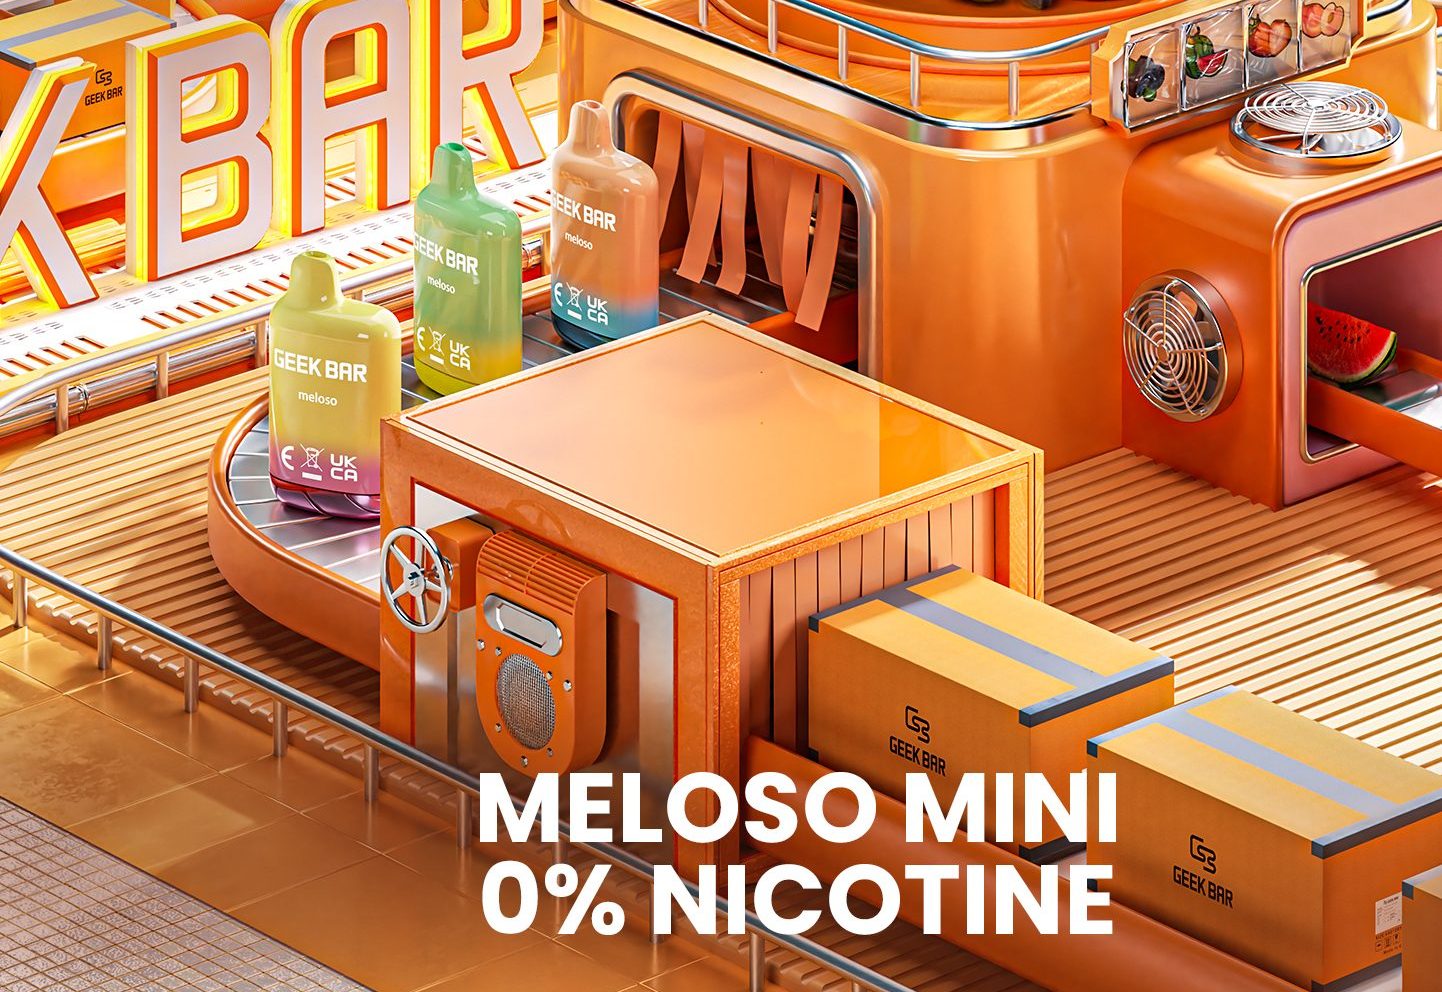 geekbar meloso mini zero nicotine new vape range